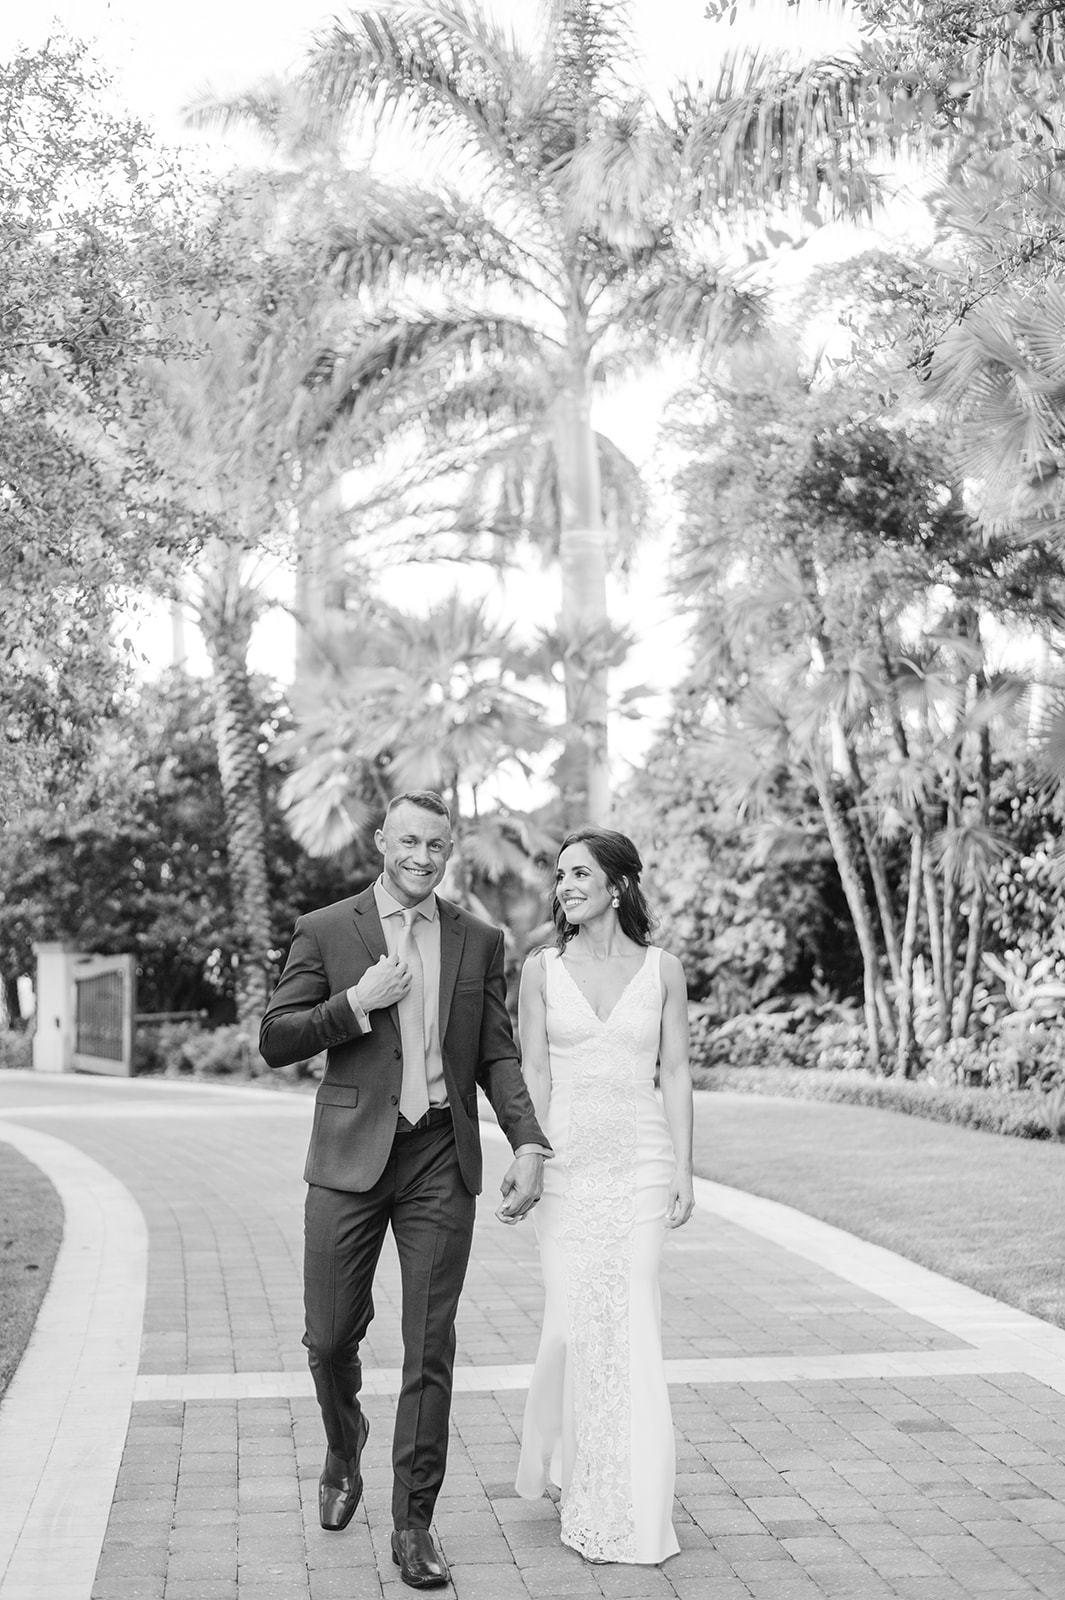 Naples Florida wedding photographer captures the groomsmen having fun
